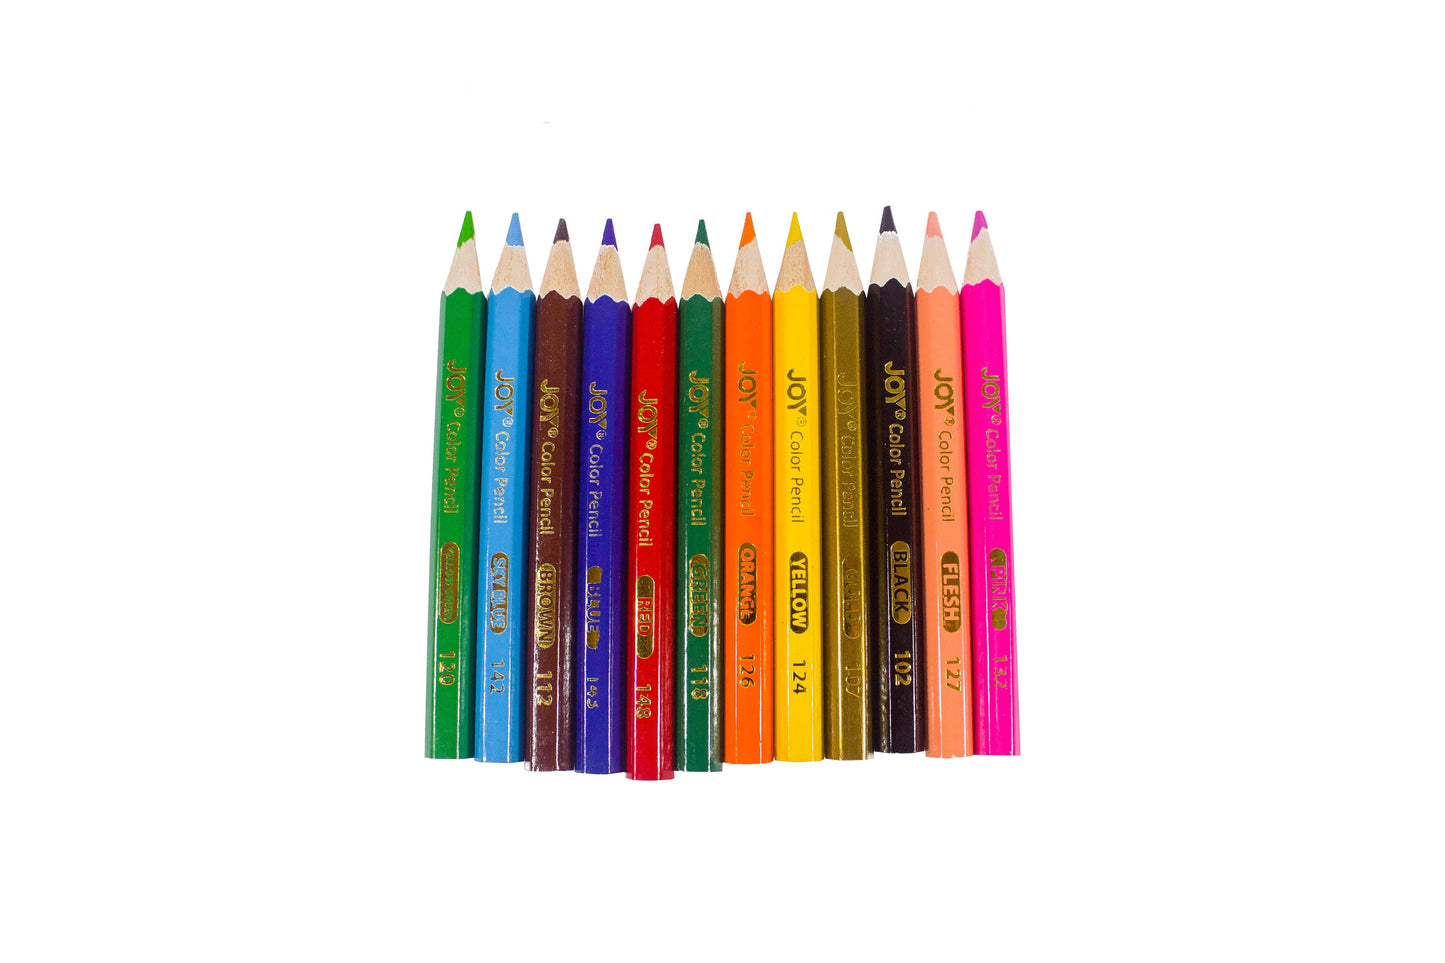 Joy Professional Color Pencil 12C Short | 48Set